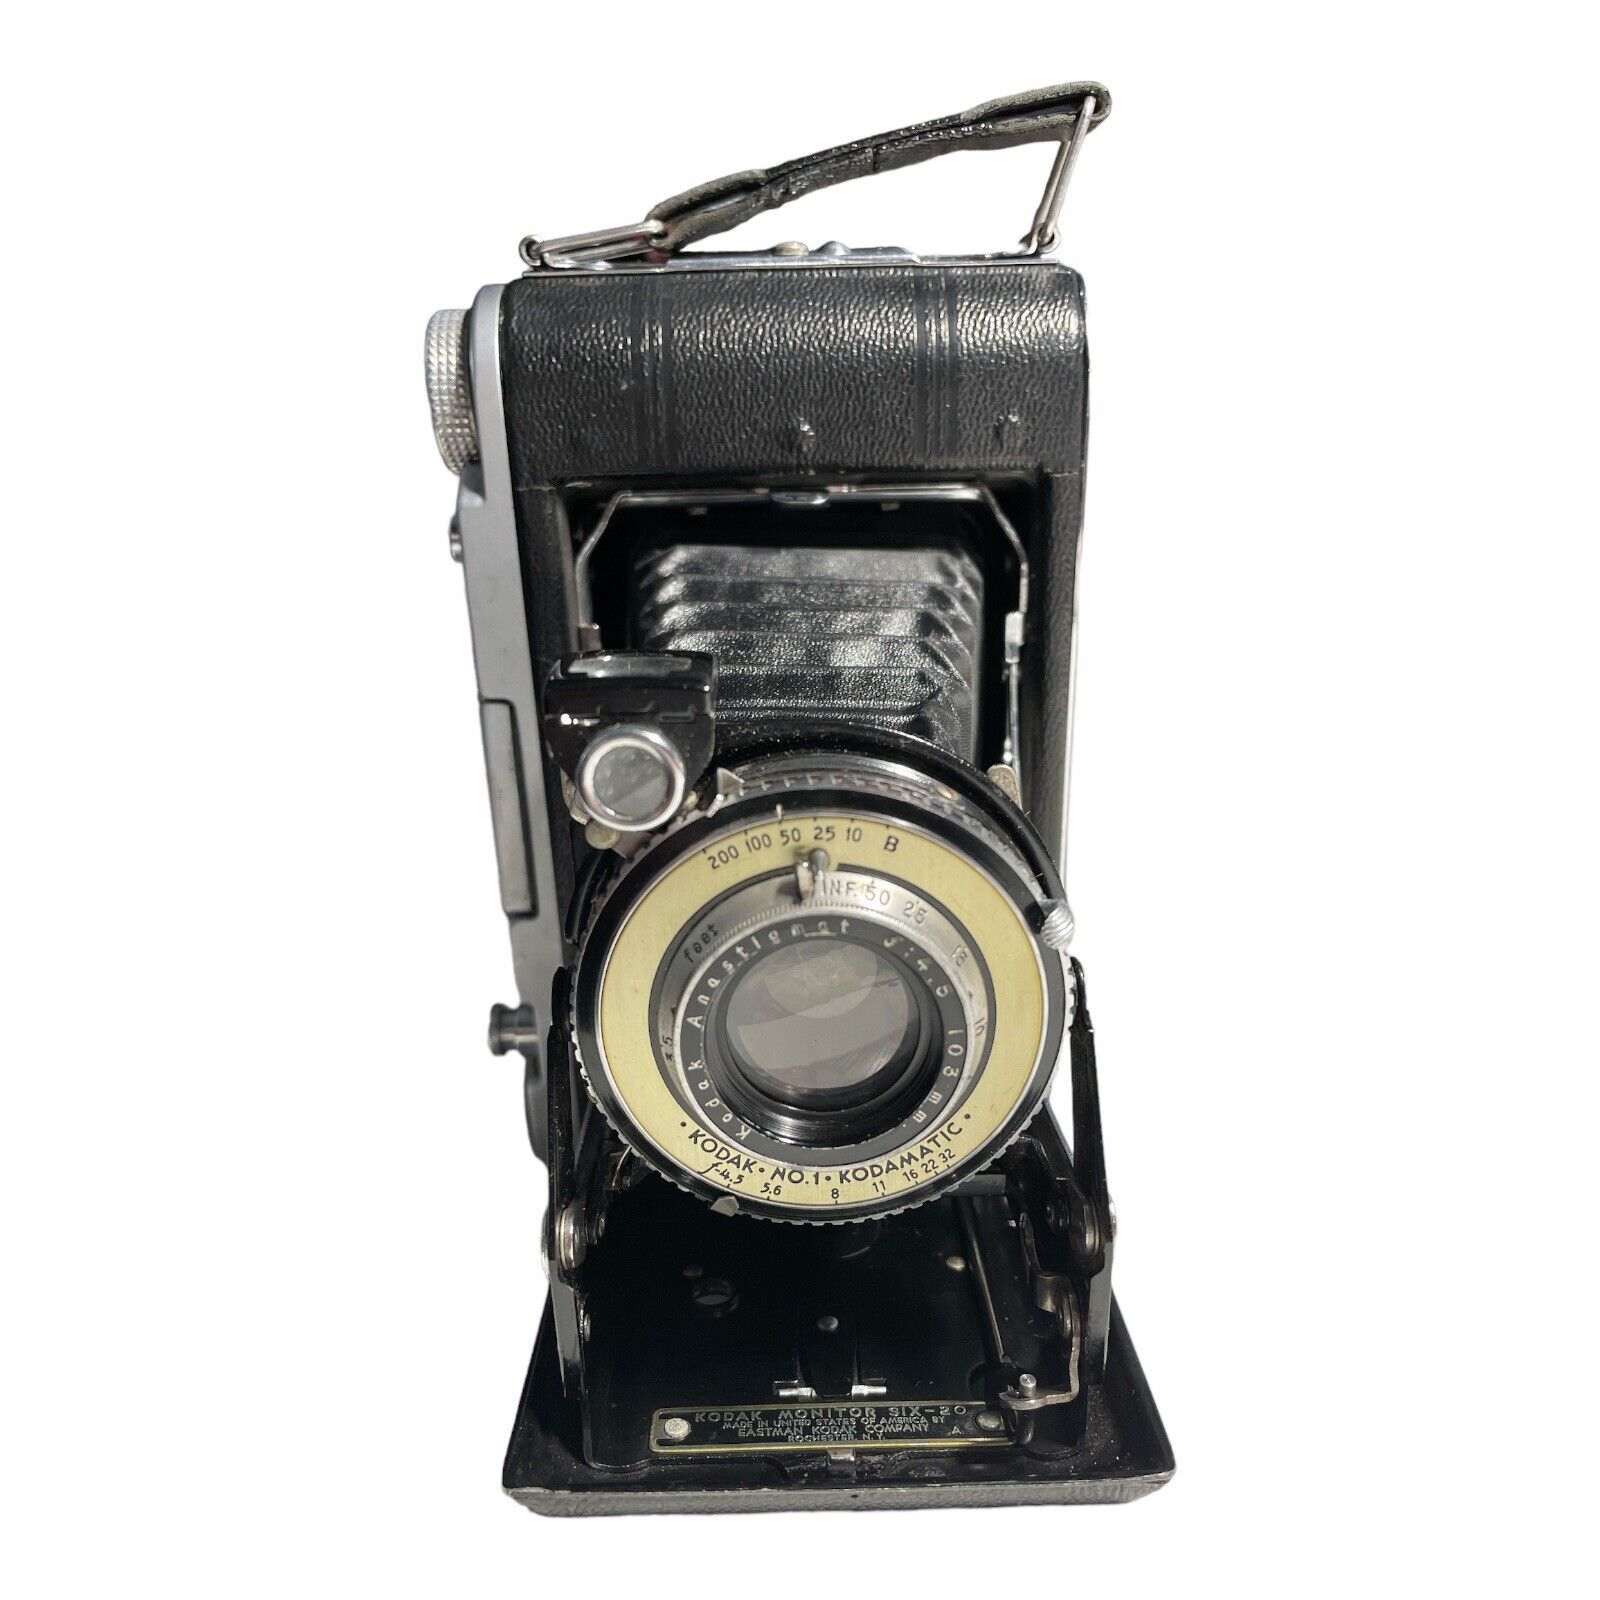 🔥 1939 Kodak Monitor Six-20 620 Folding Camera W/ Anastigmat F/4.5 103mm Lens🔥